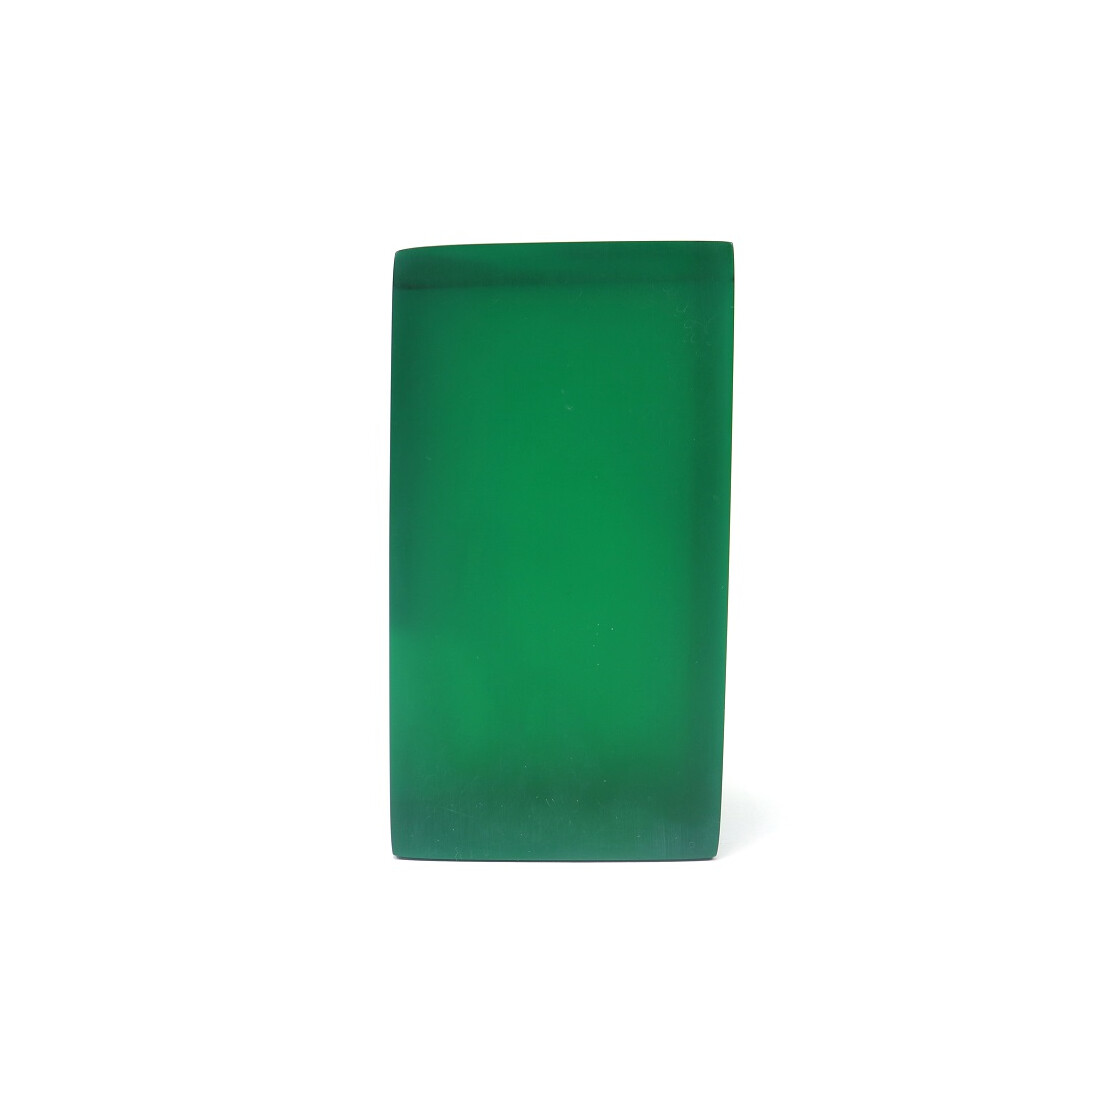 EFFECT Farbkonzentrat Grün 100 ml